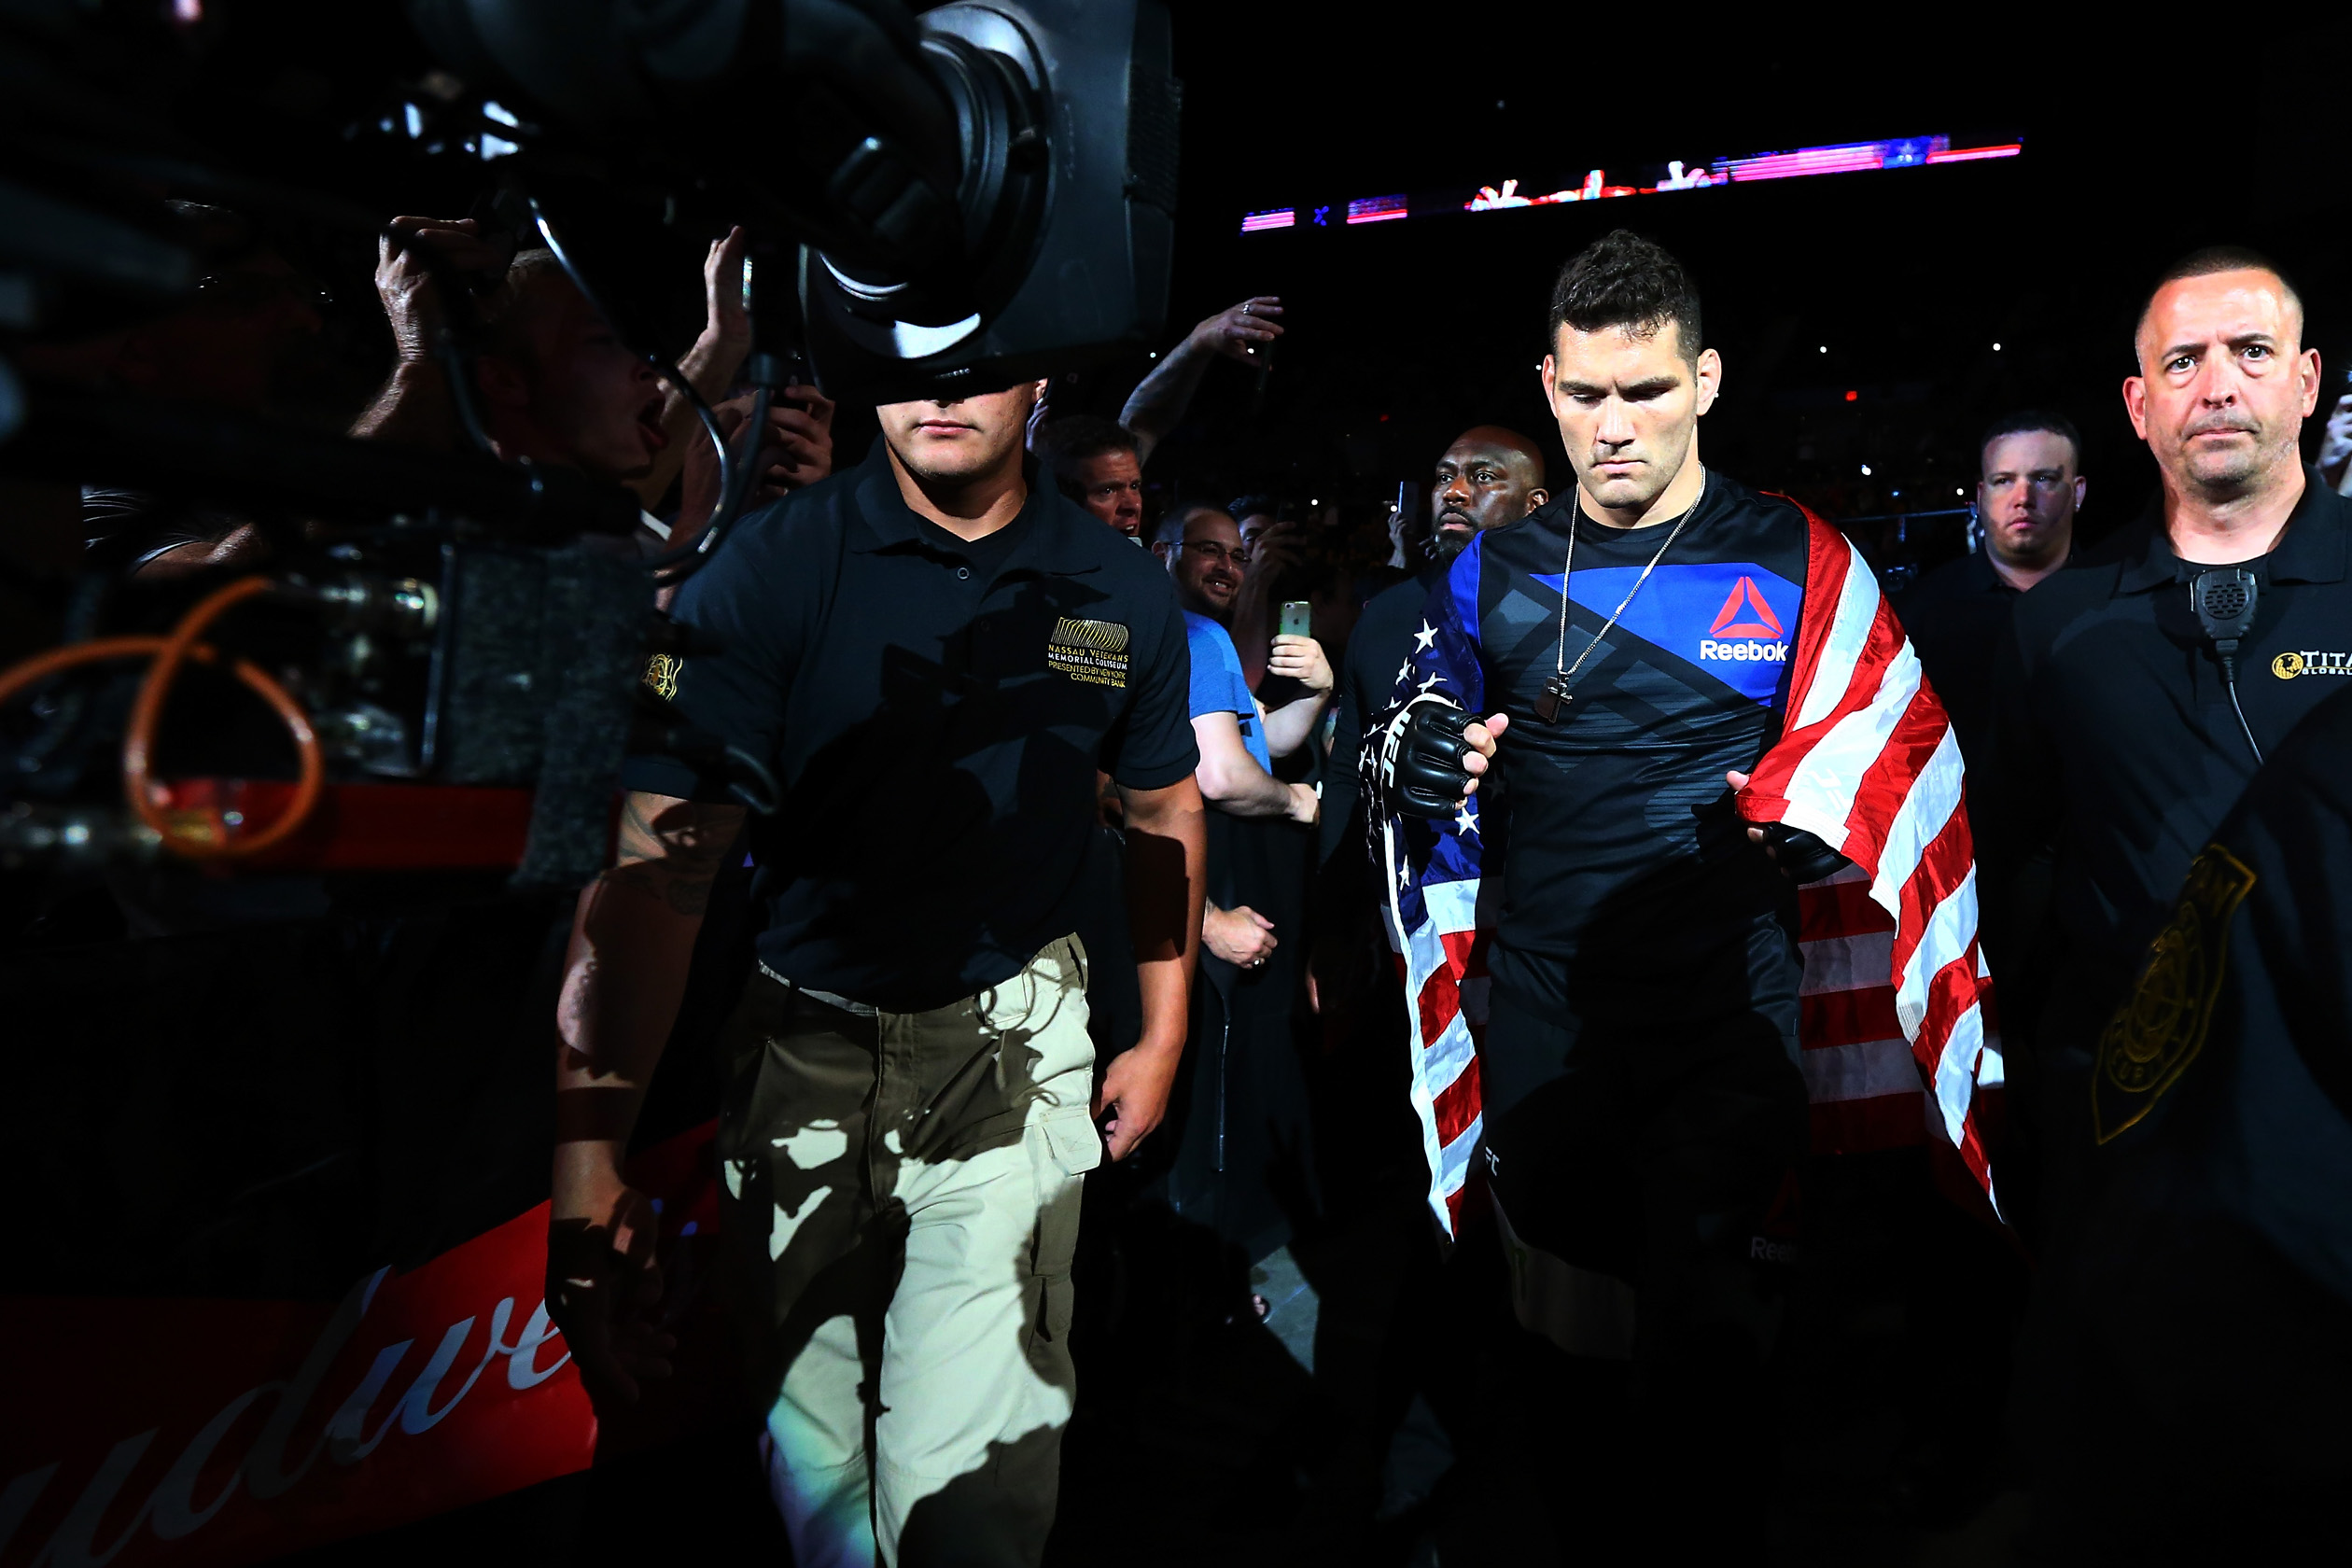 Monster Energy’s Chris ‘The All American’ Weidman Chokes Out Kelvin Gastelum  At UFC on Fox 25